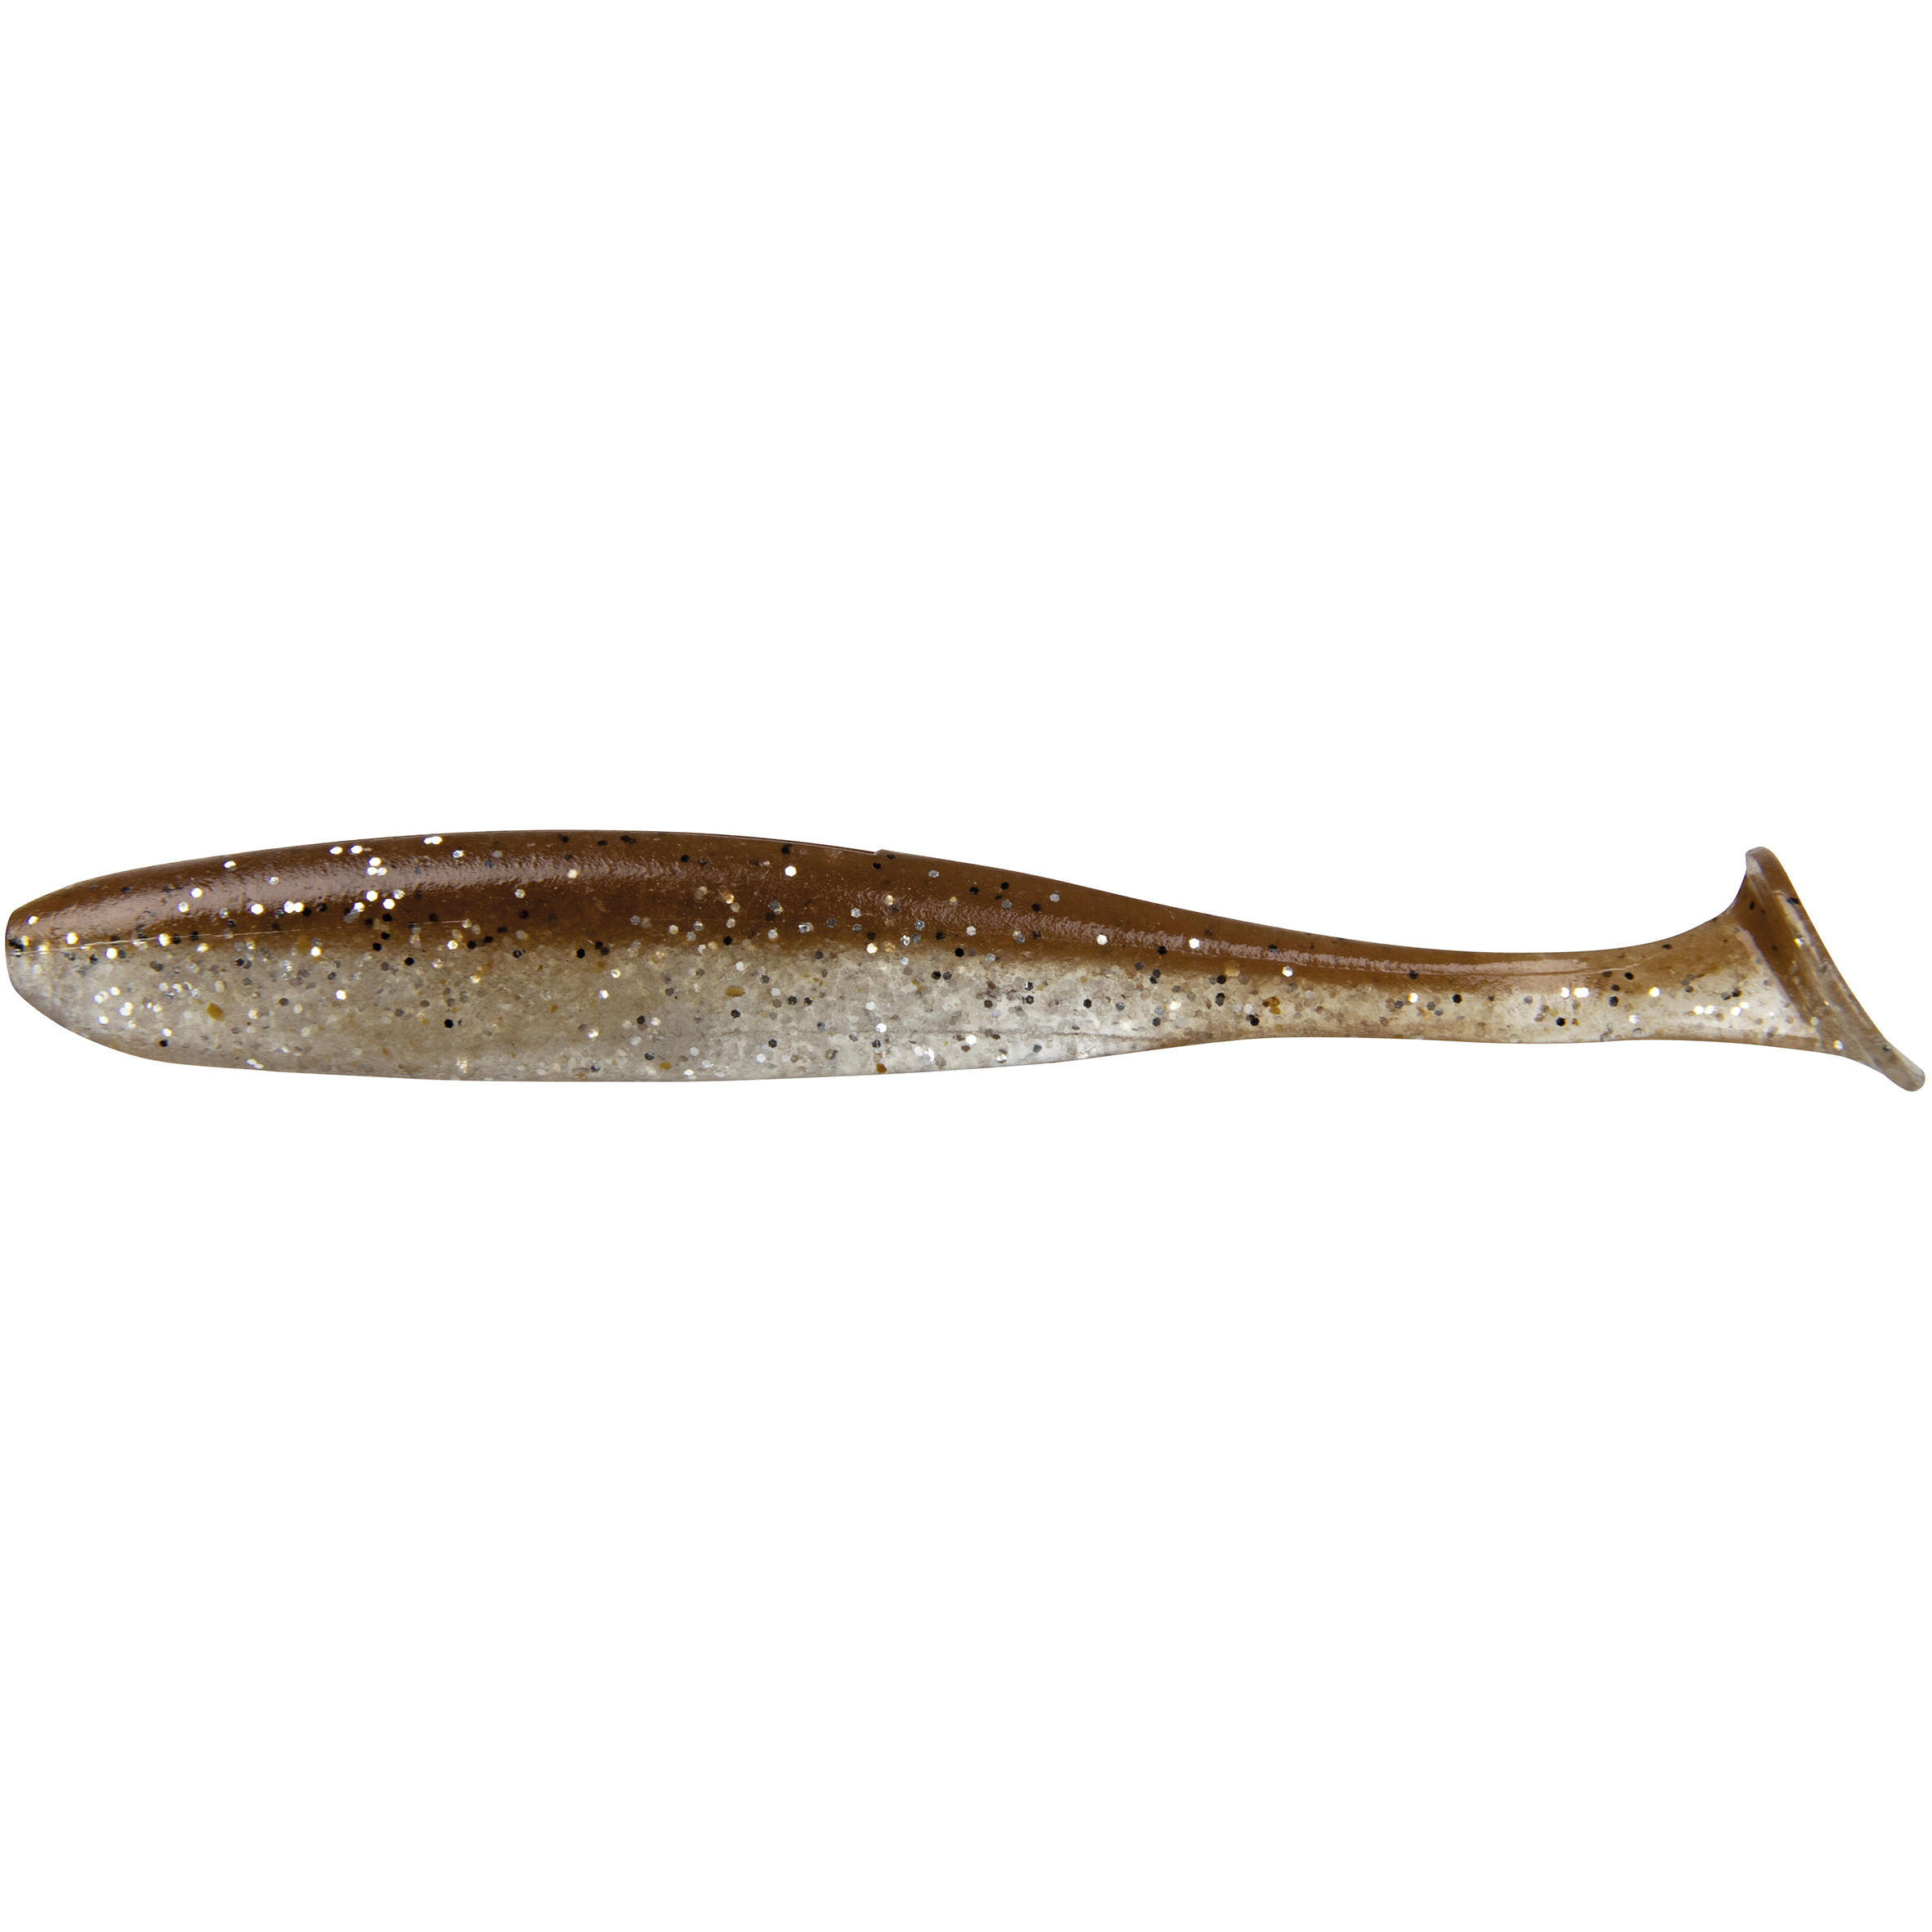 Nălucă Flexibilă pescuit EASY SHINER 5 BROWN La Oferta Online decathlon imagine La Oferta Online